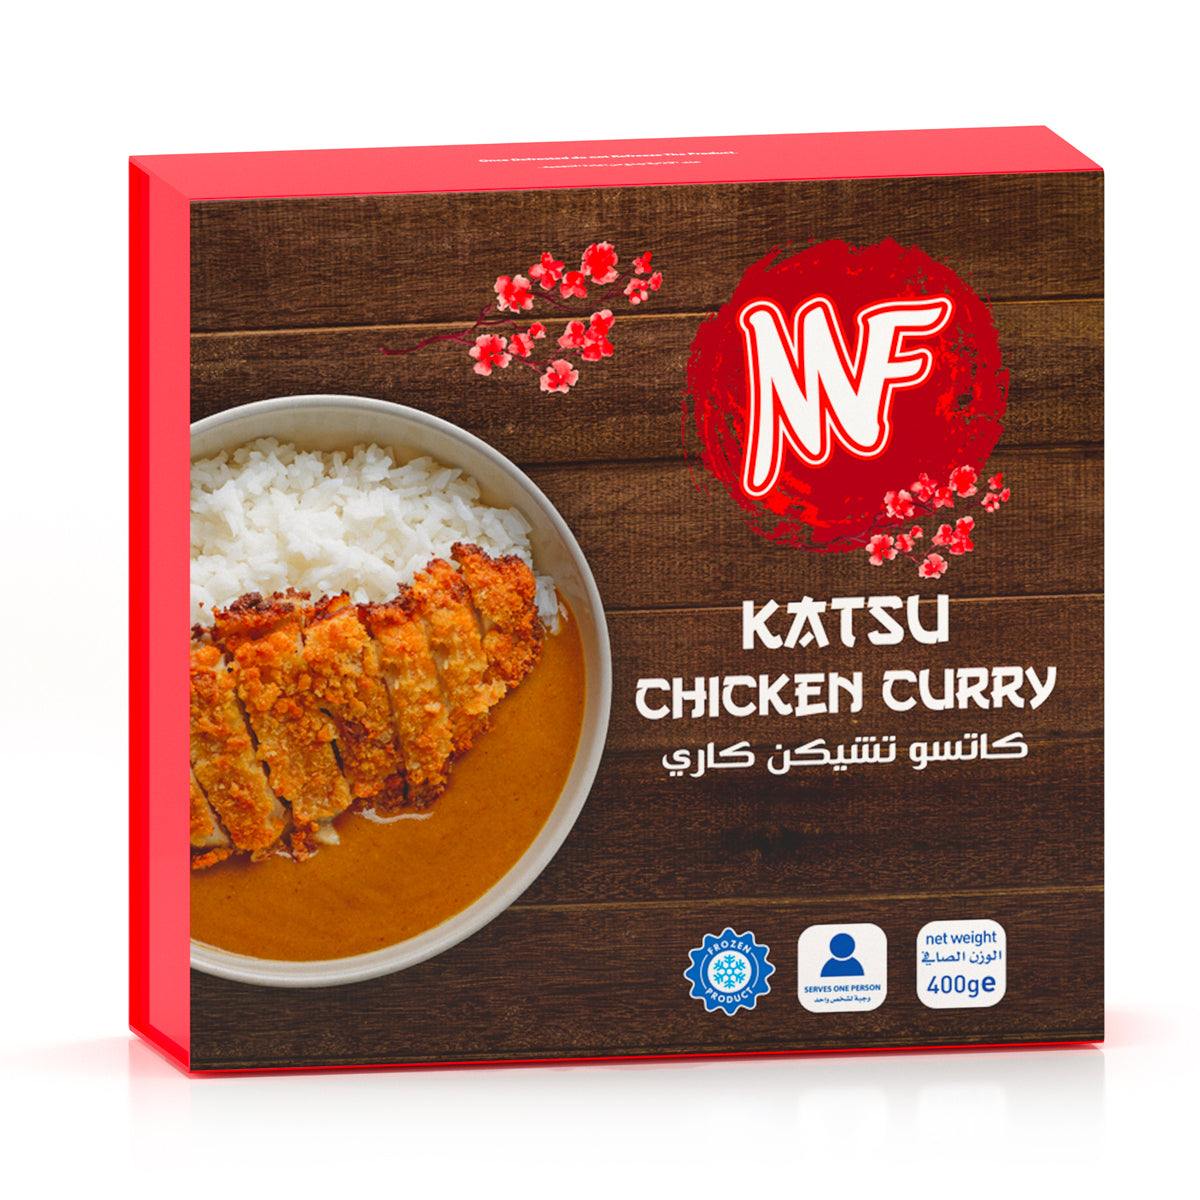 MF Katsu Chicken Curry 400g